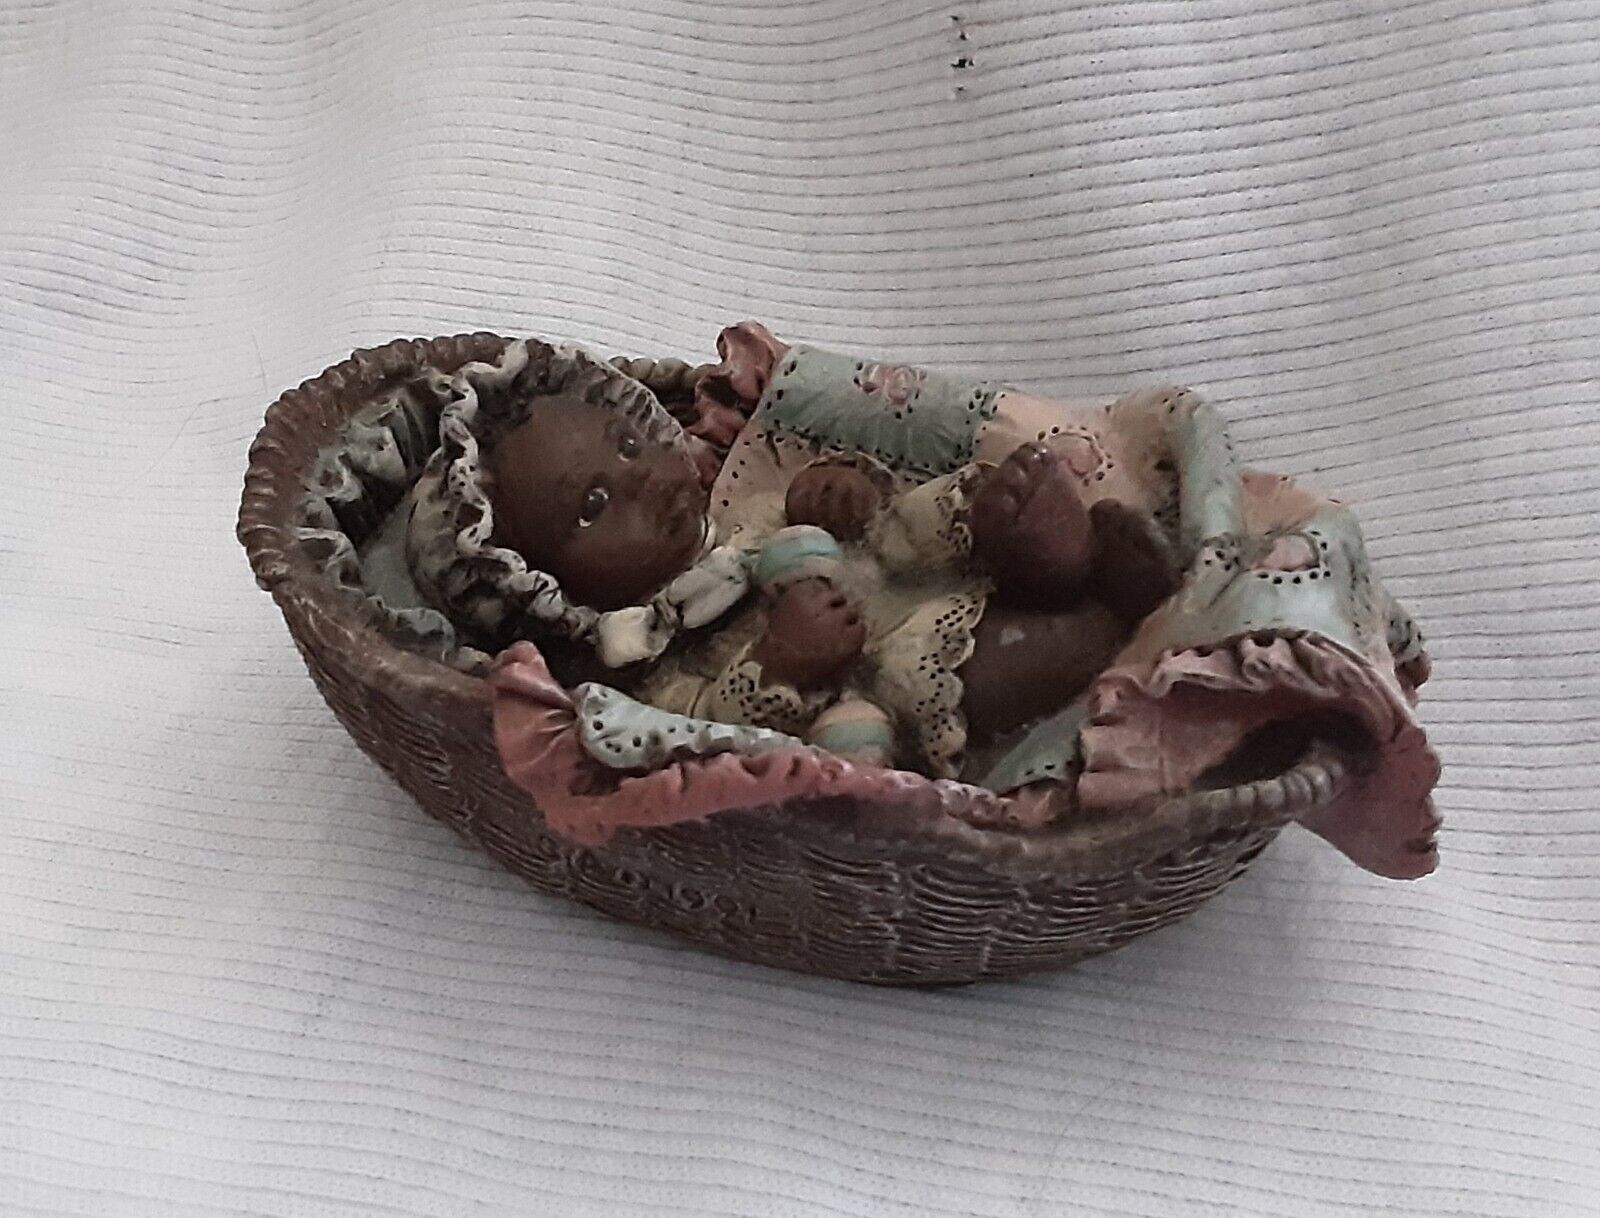 Vintage Sarah's Attic Figurine Baby in a Basket, #537